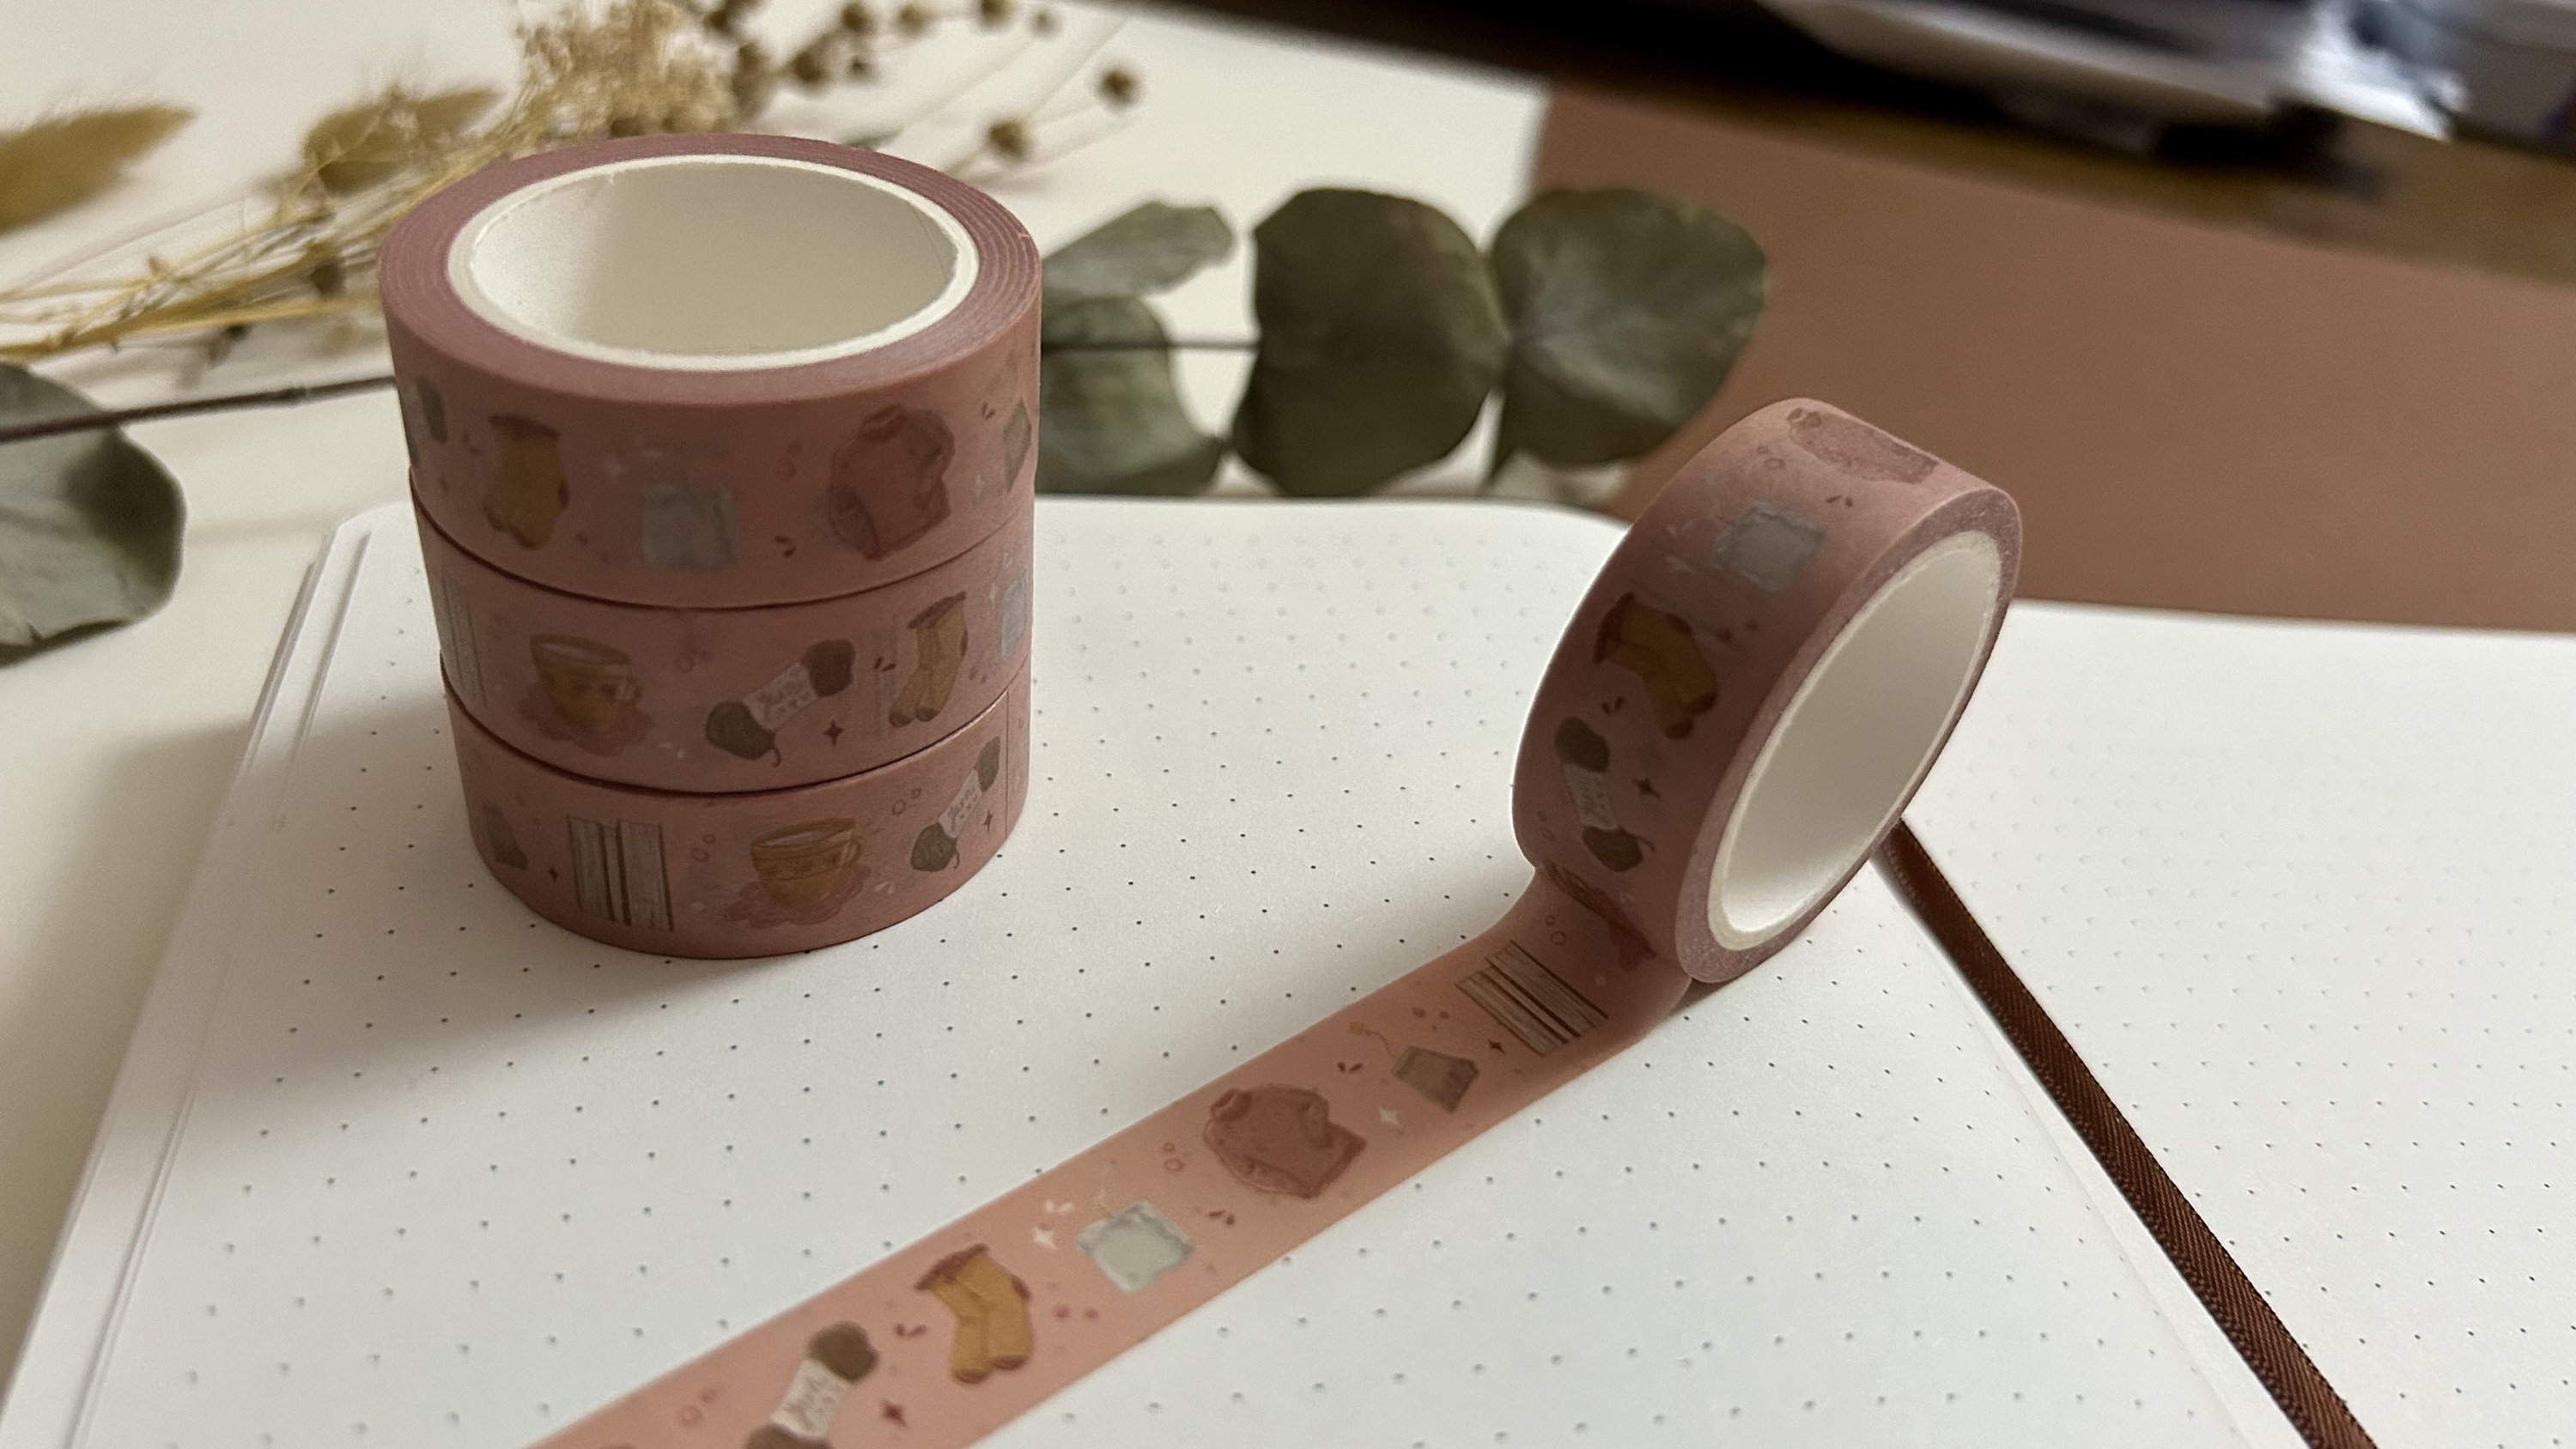 Glitter Tape, Decorative Craft Tape Self Adhesive Stick 1.5cmx10m